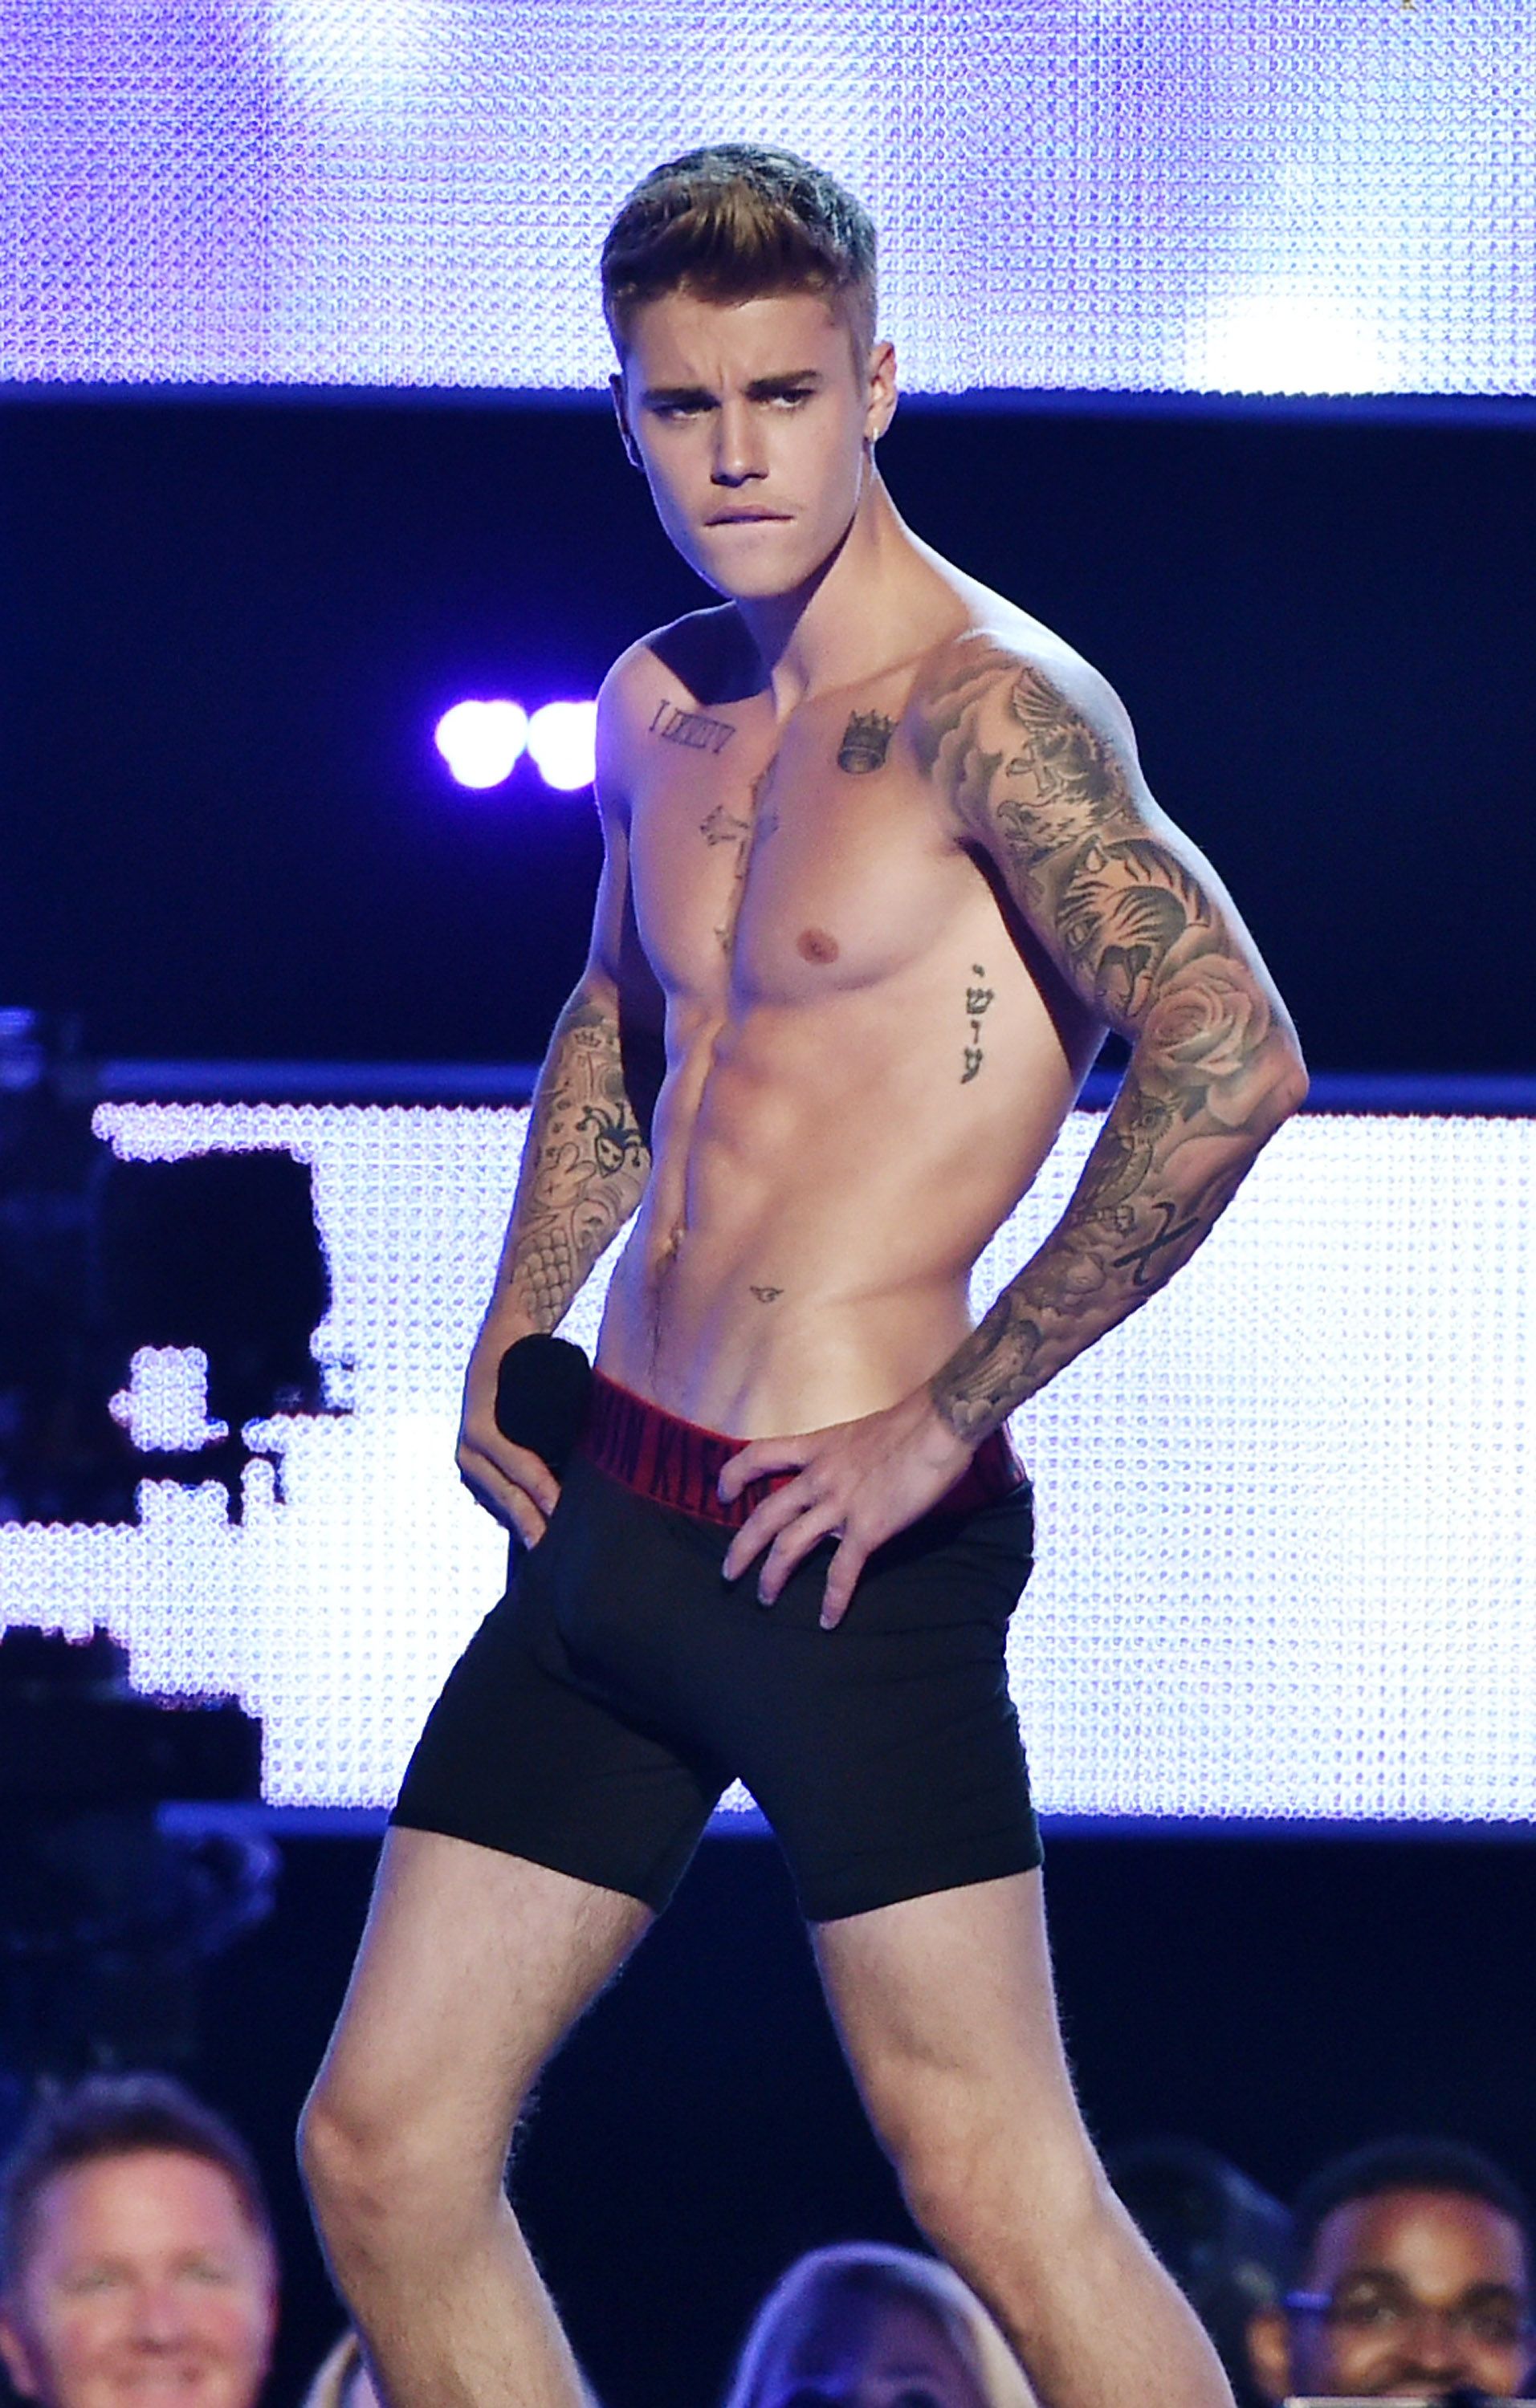 Justin Bieber Nude Photos: Are They Legal? | Billboard – Billboard